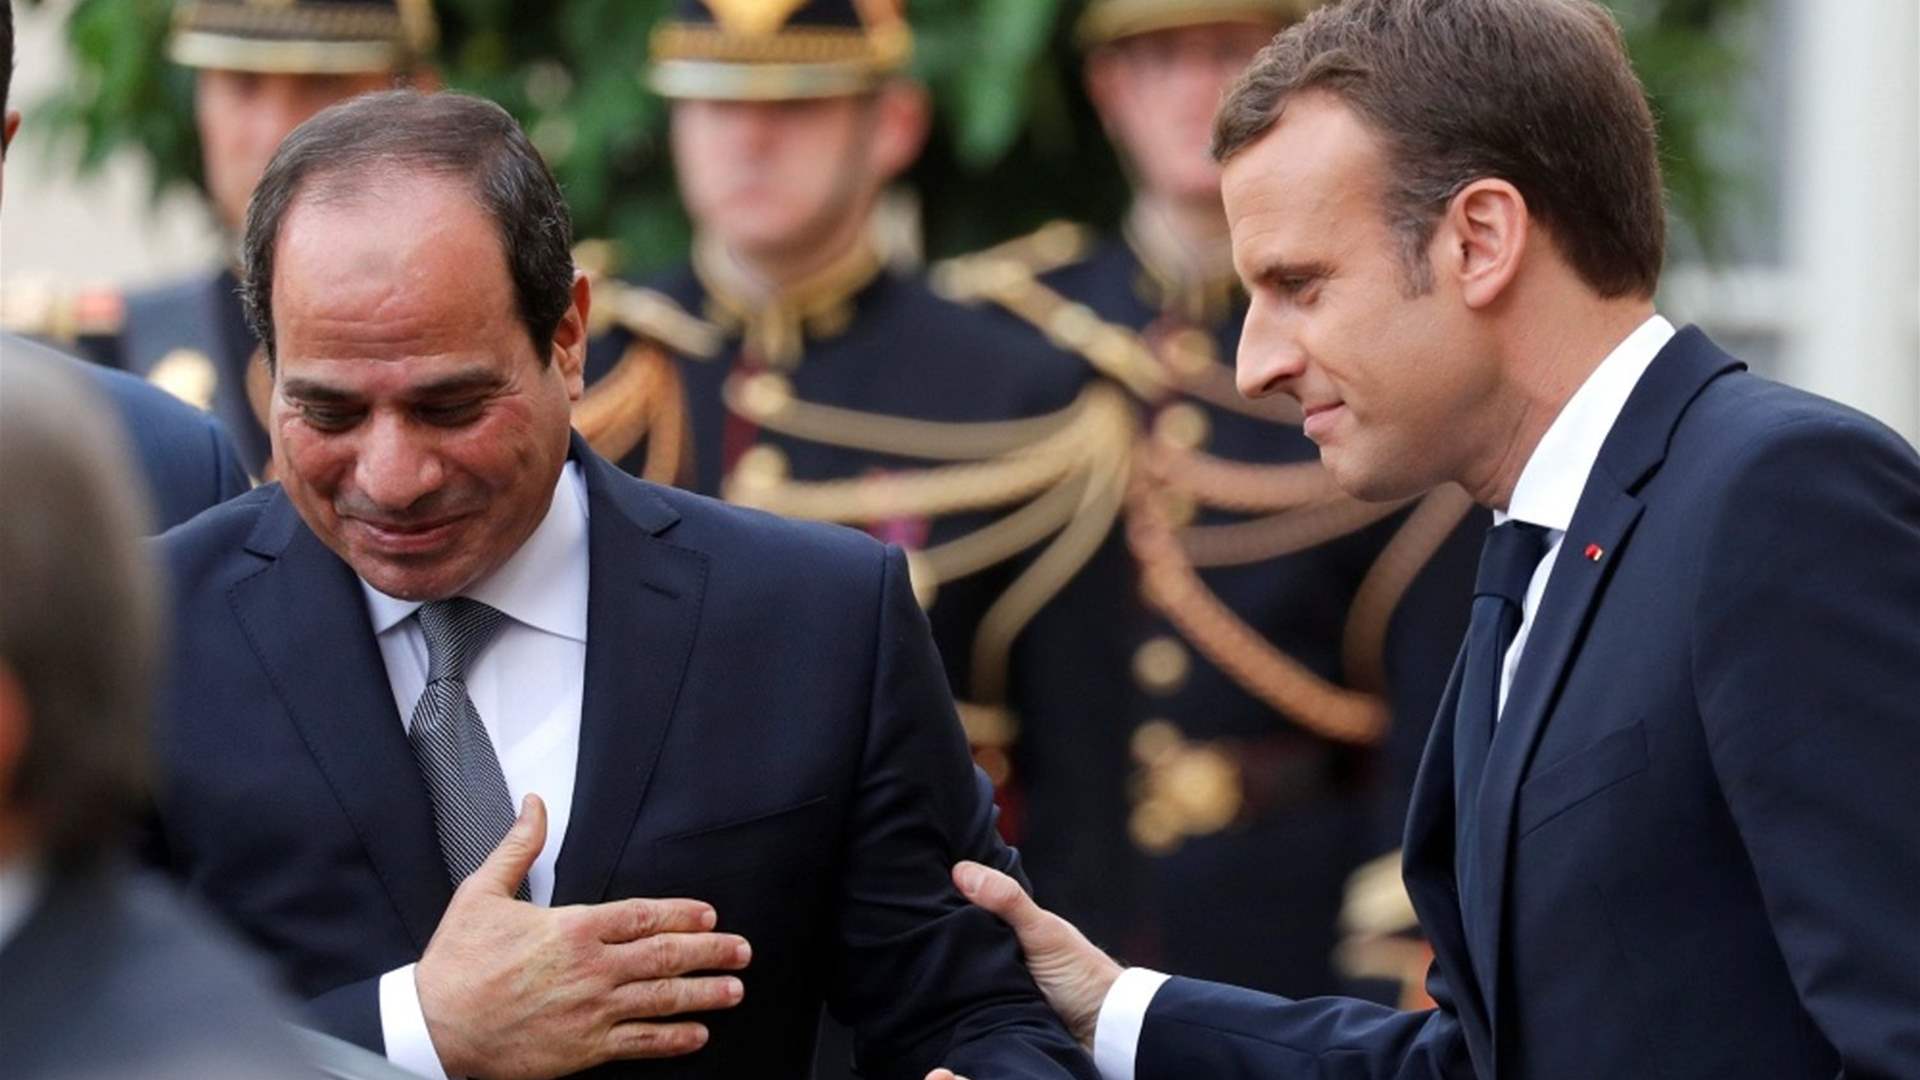 Macron to meet Egyptian President in Cairo on Wednesday